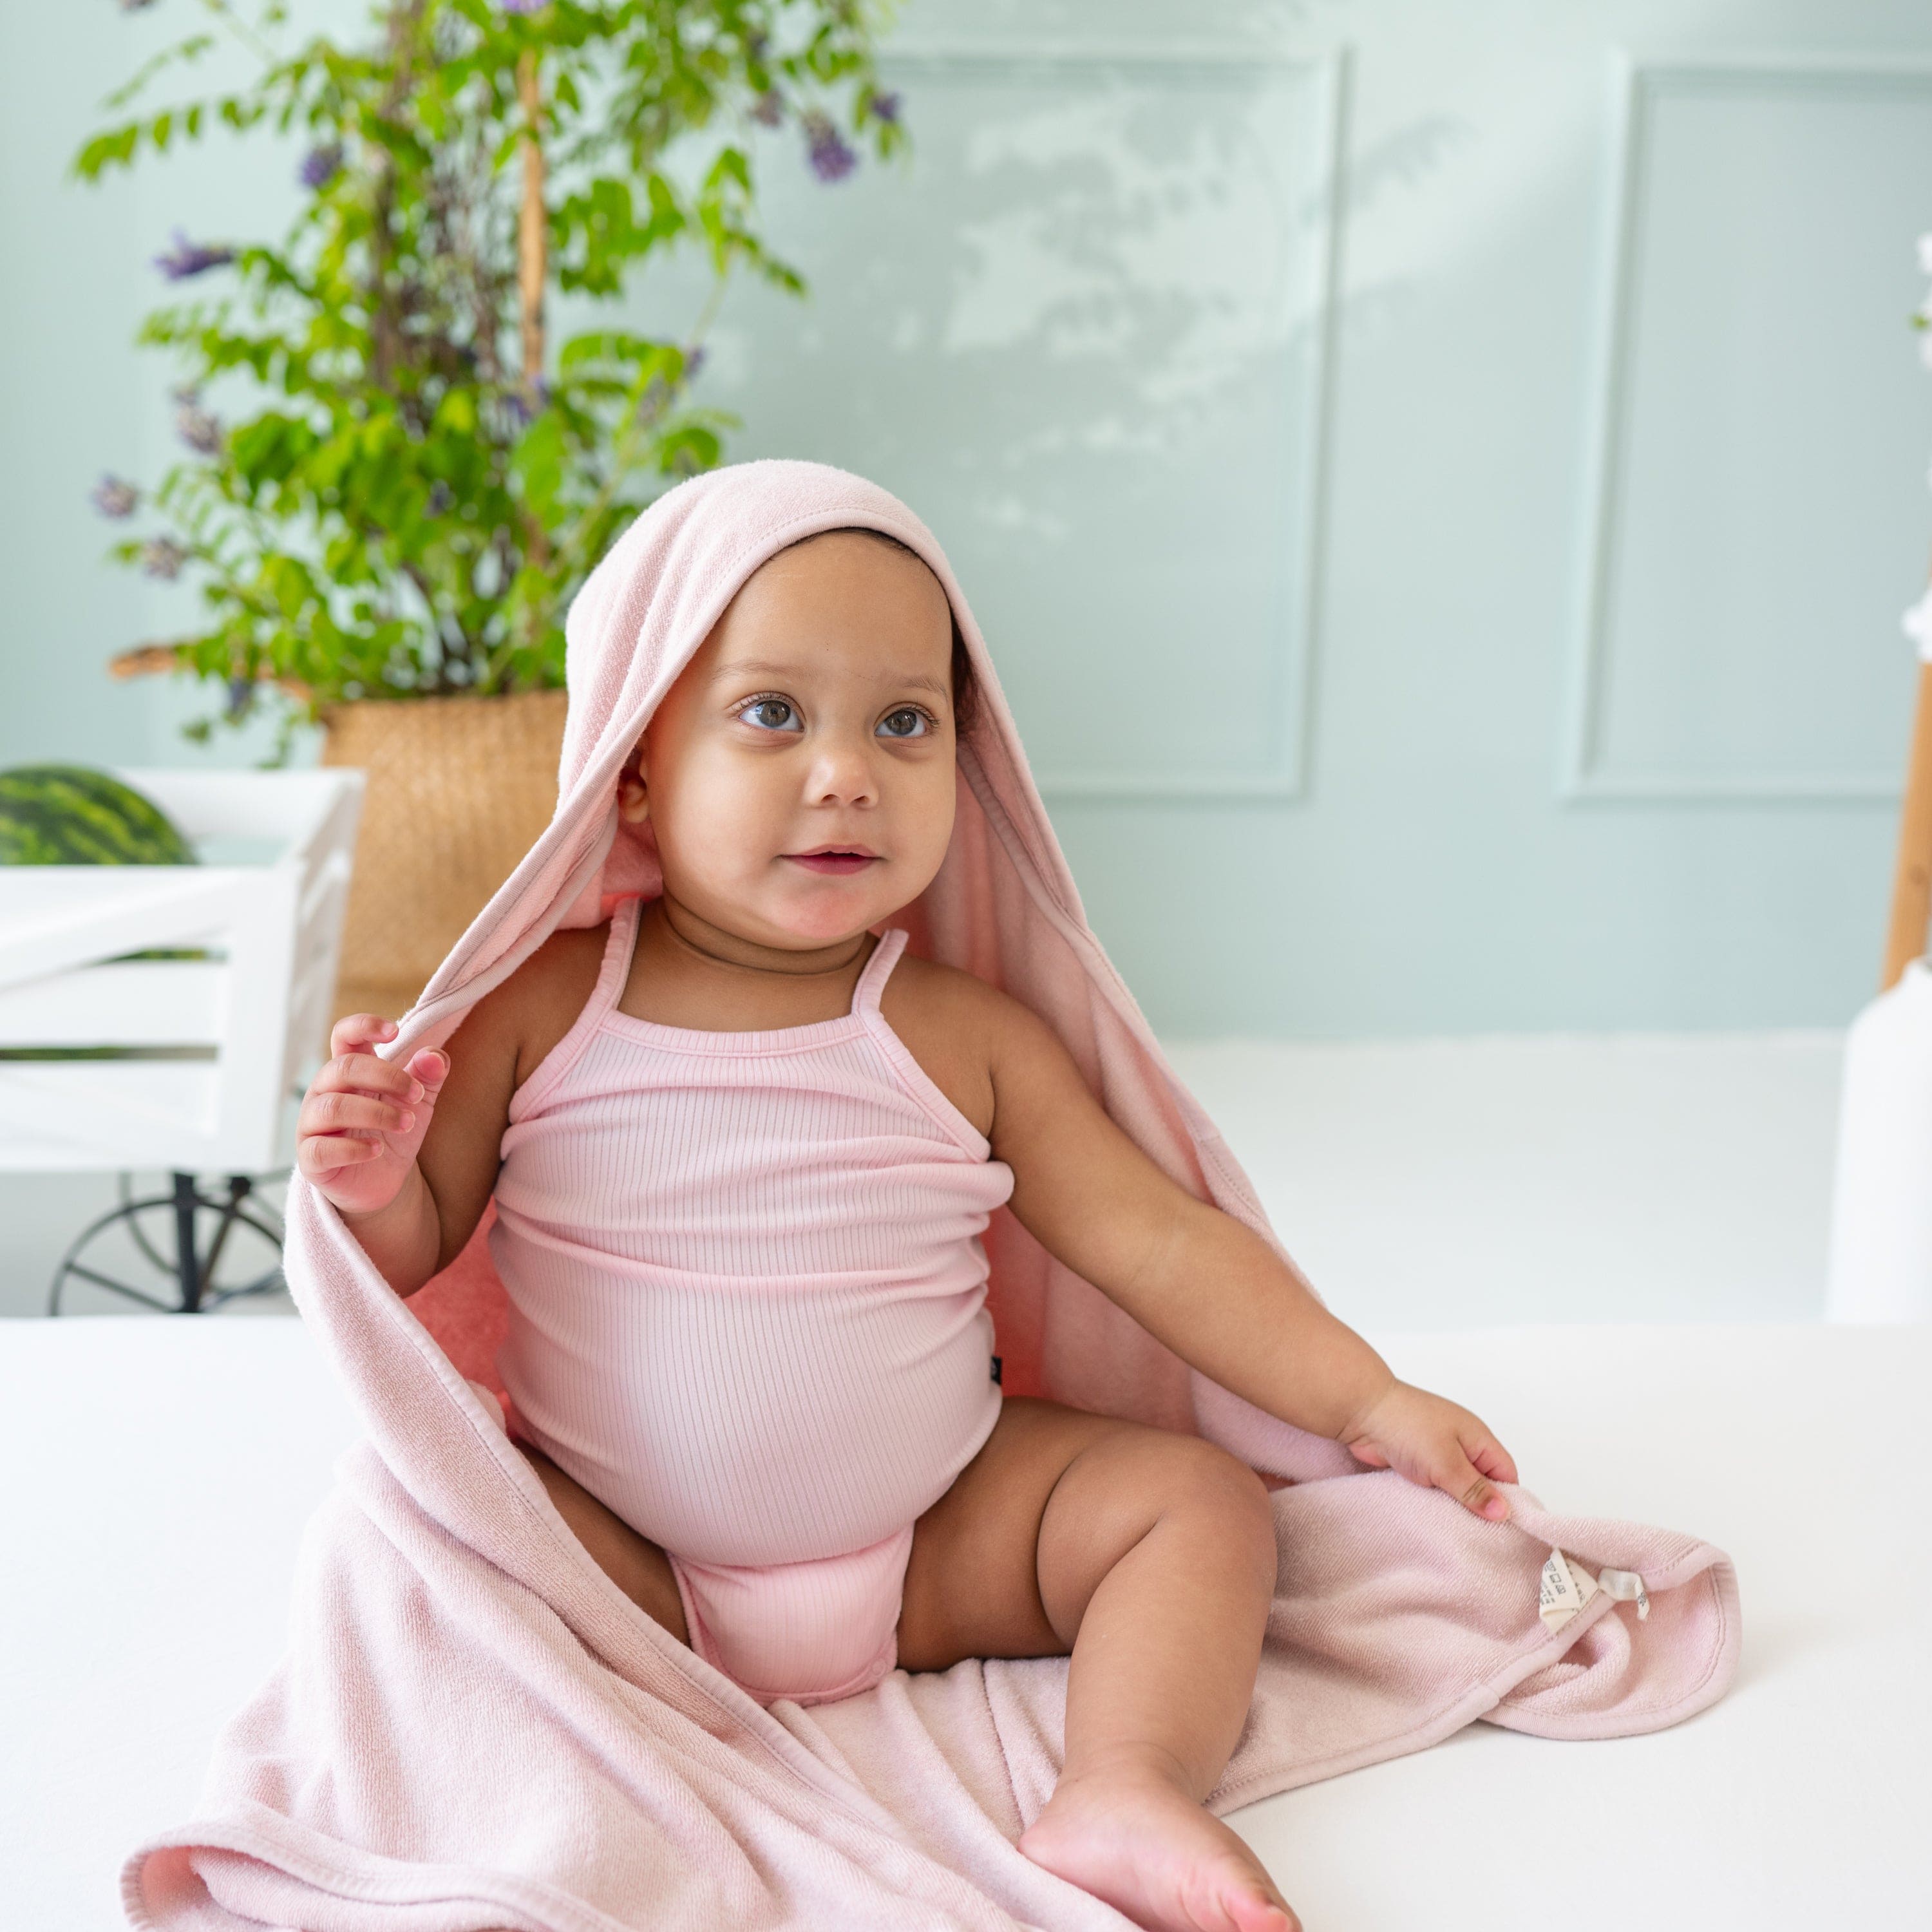 Kyte Baby Hooded Bath Towel Blush / Infant Hooded Bath Towel in Blush